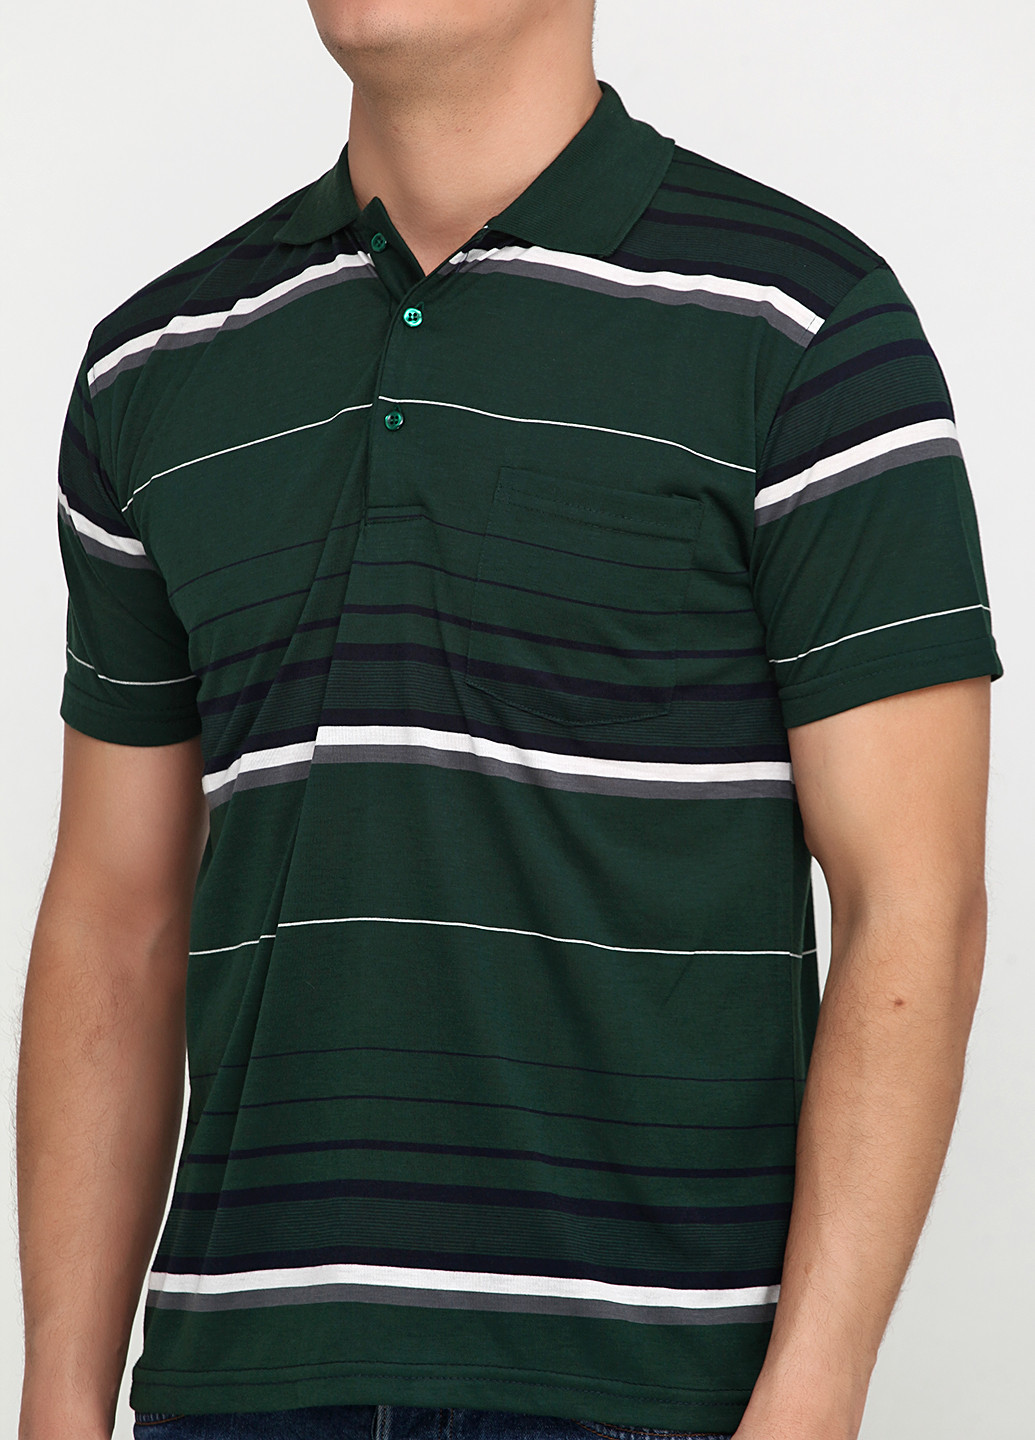 Темно-зеленая футболка-поло для мужчин Onur в полоску